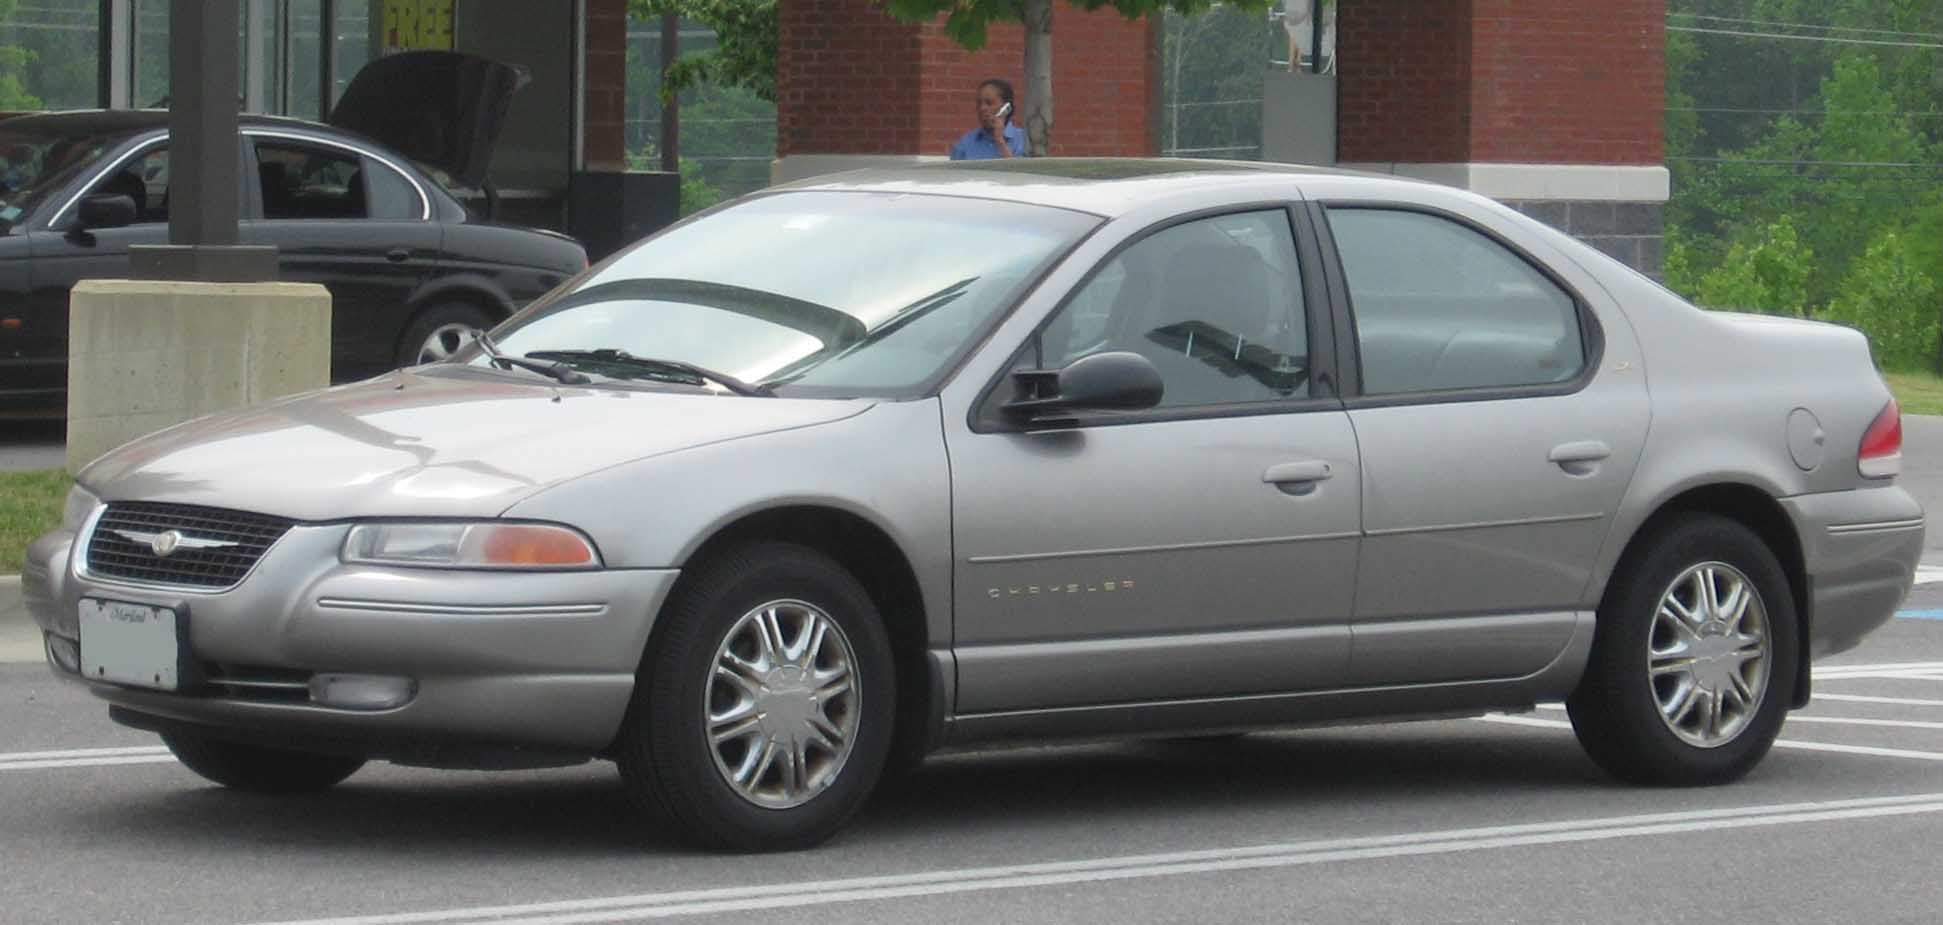 File:1999-2000 Chrysler Cirrus.jpg - Wikimedia Commons